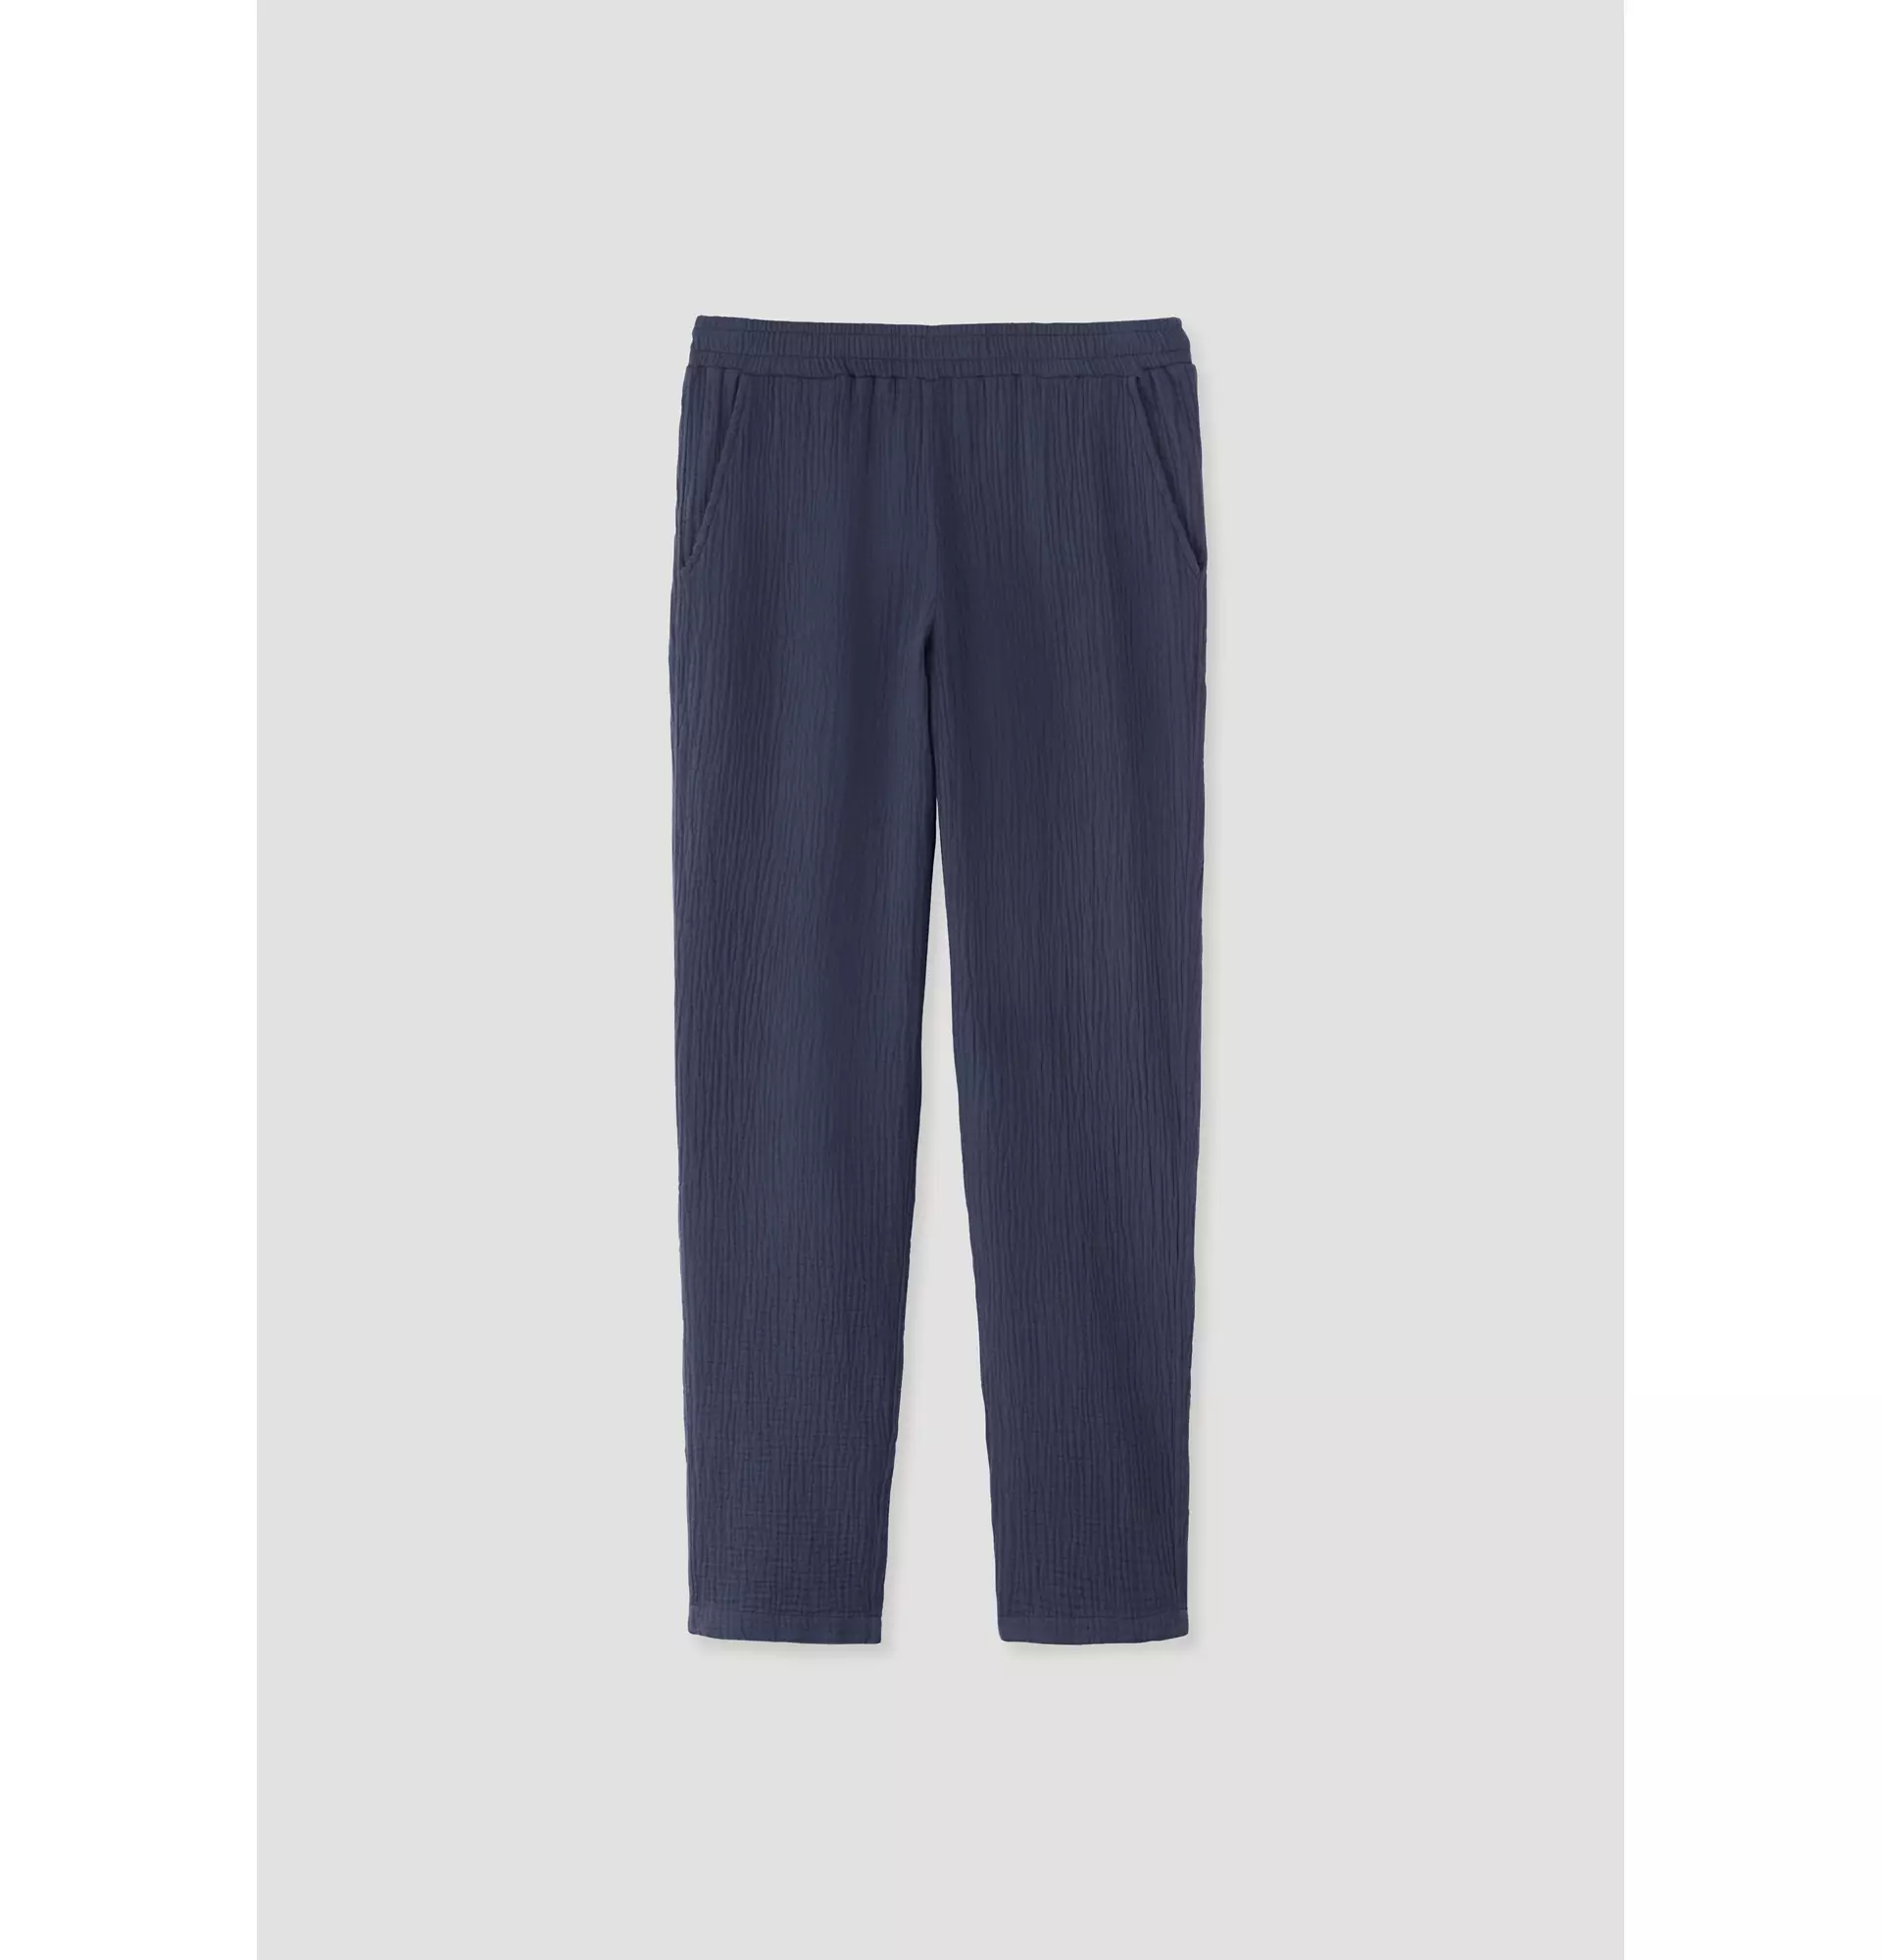 Handloom Cotton Navy Blue Pajama Pants - Chamomile Home